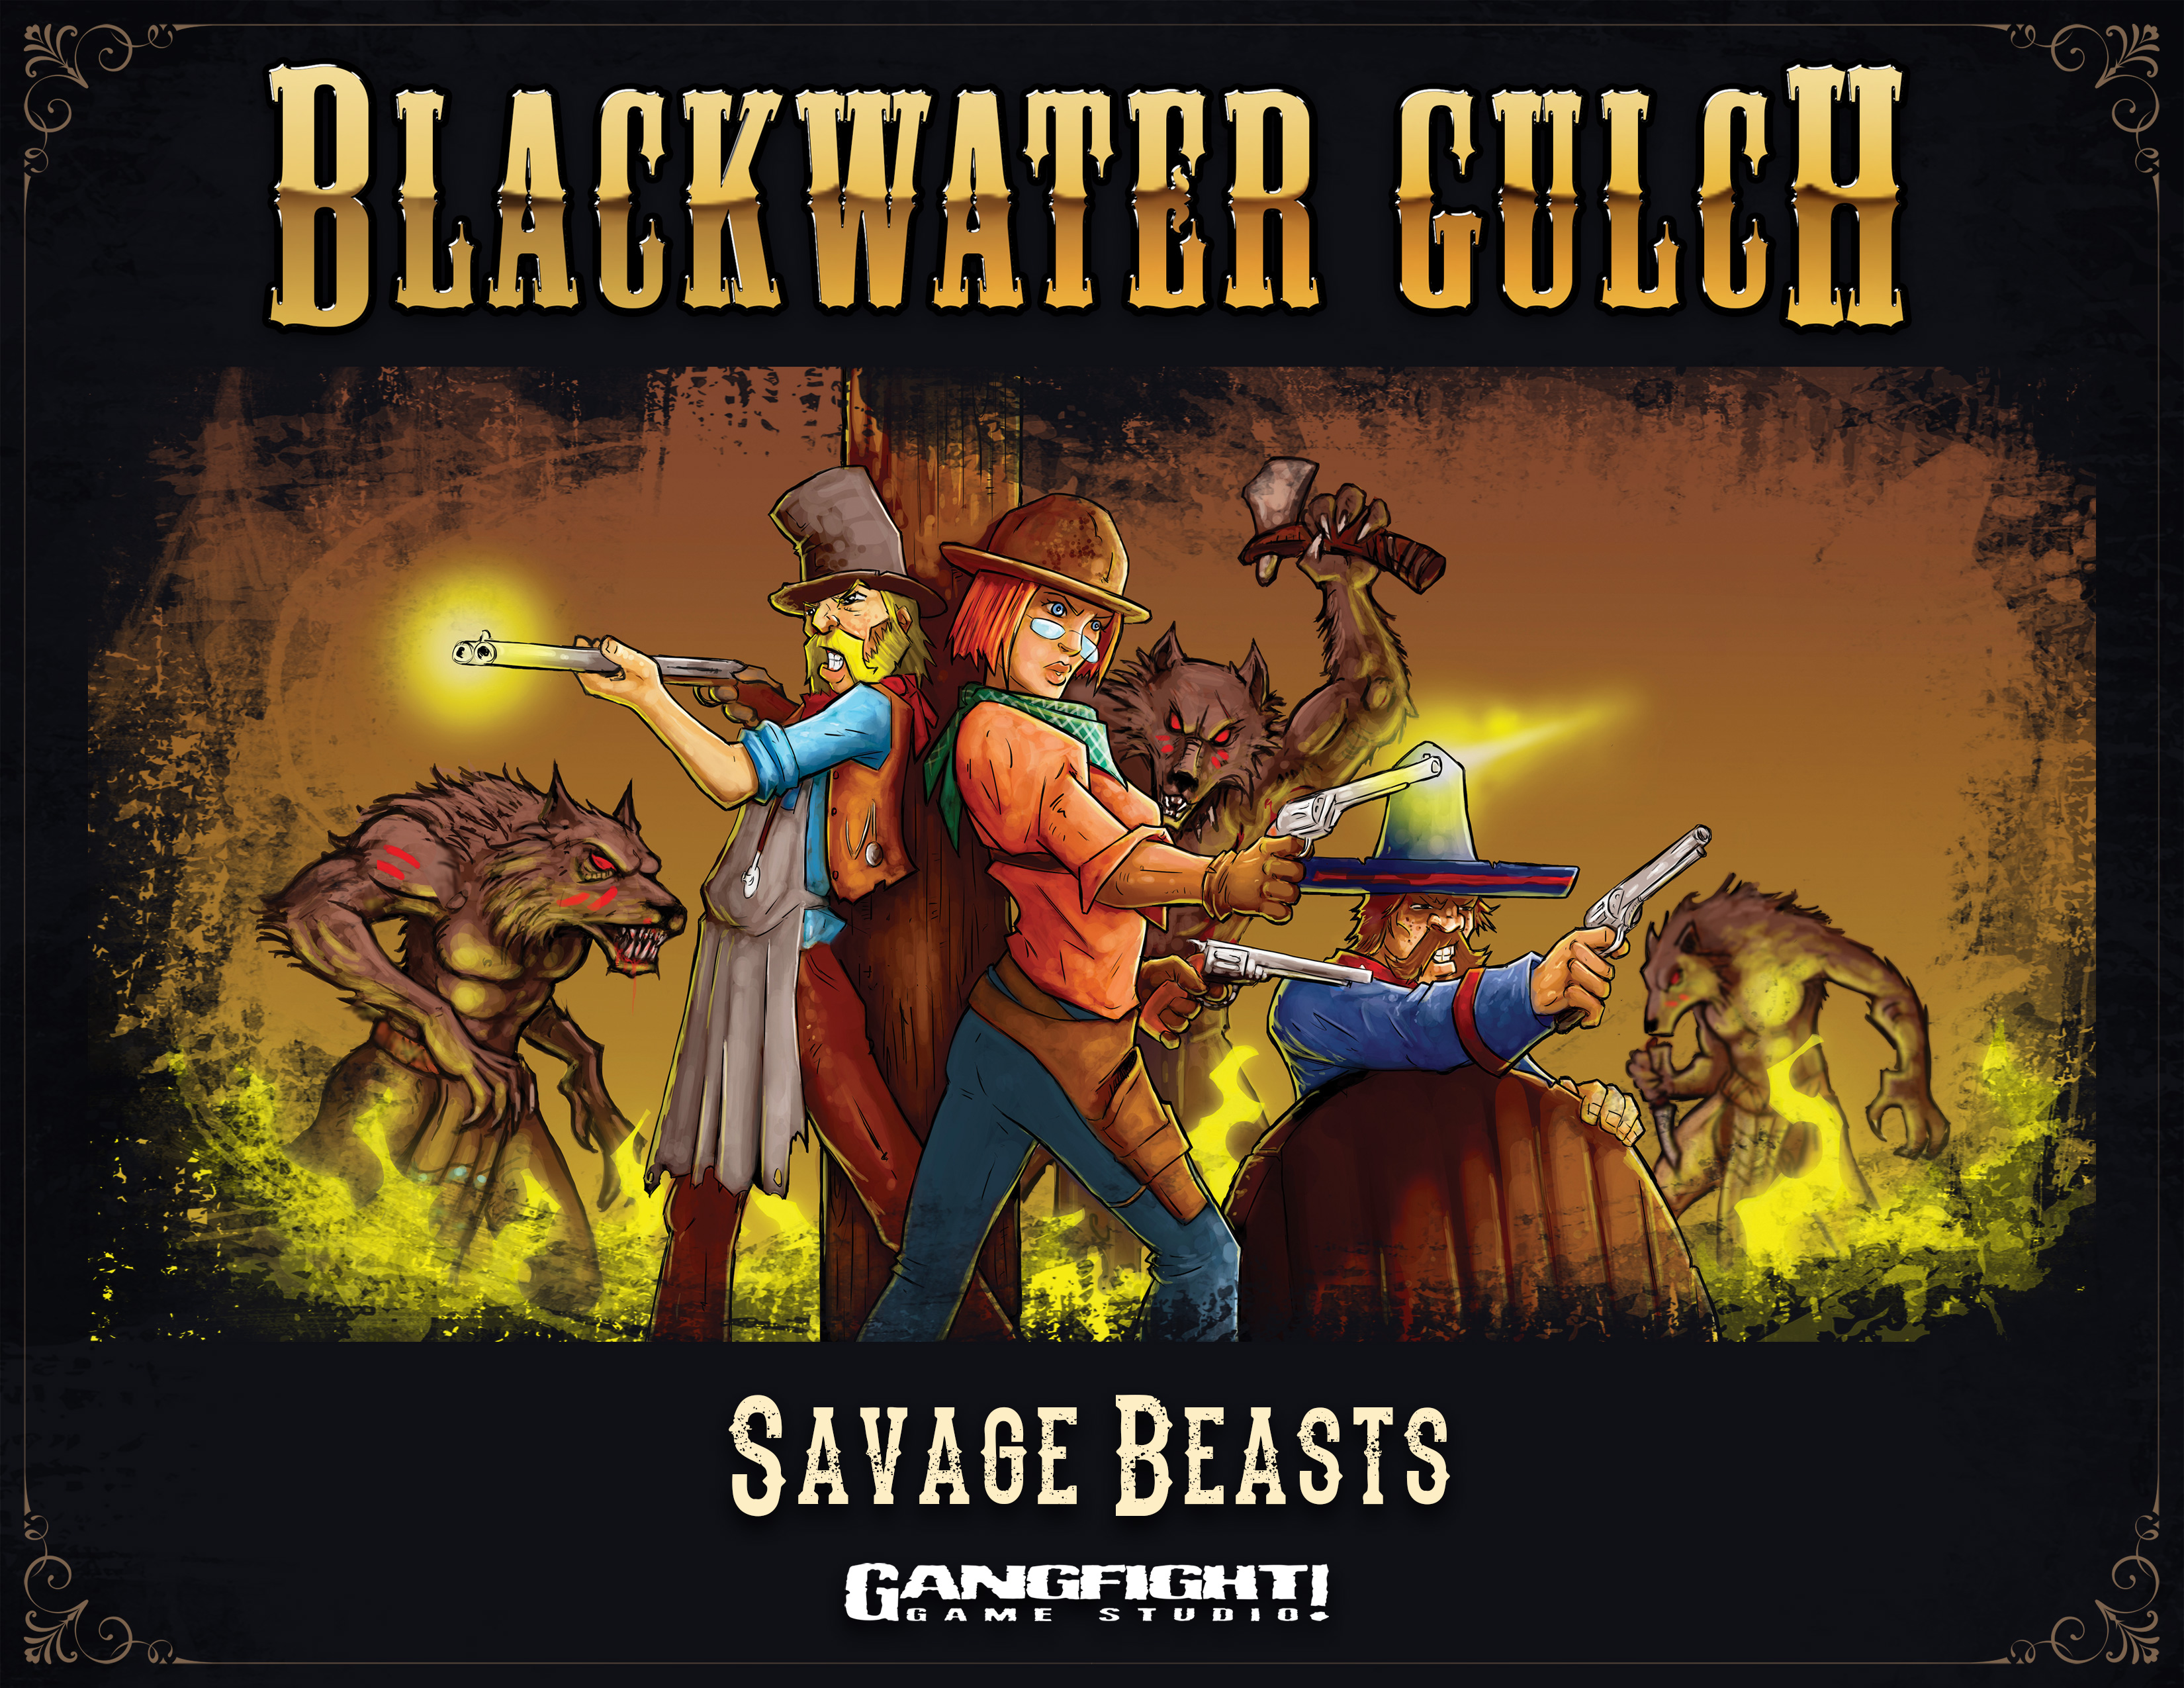 Blackwater Gulch – Savage Beasts Expansion